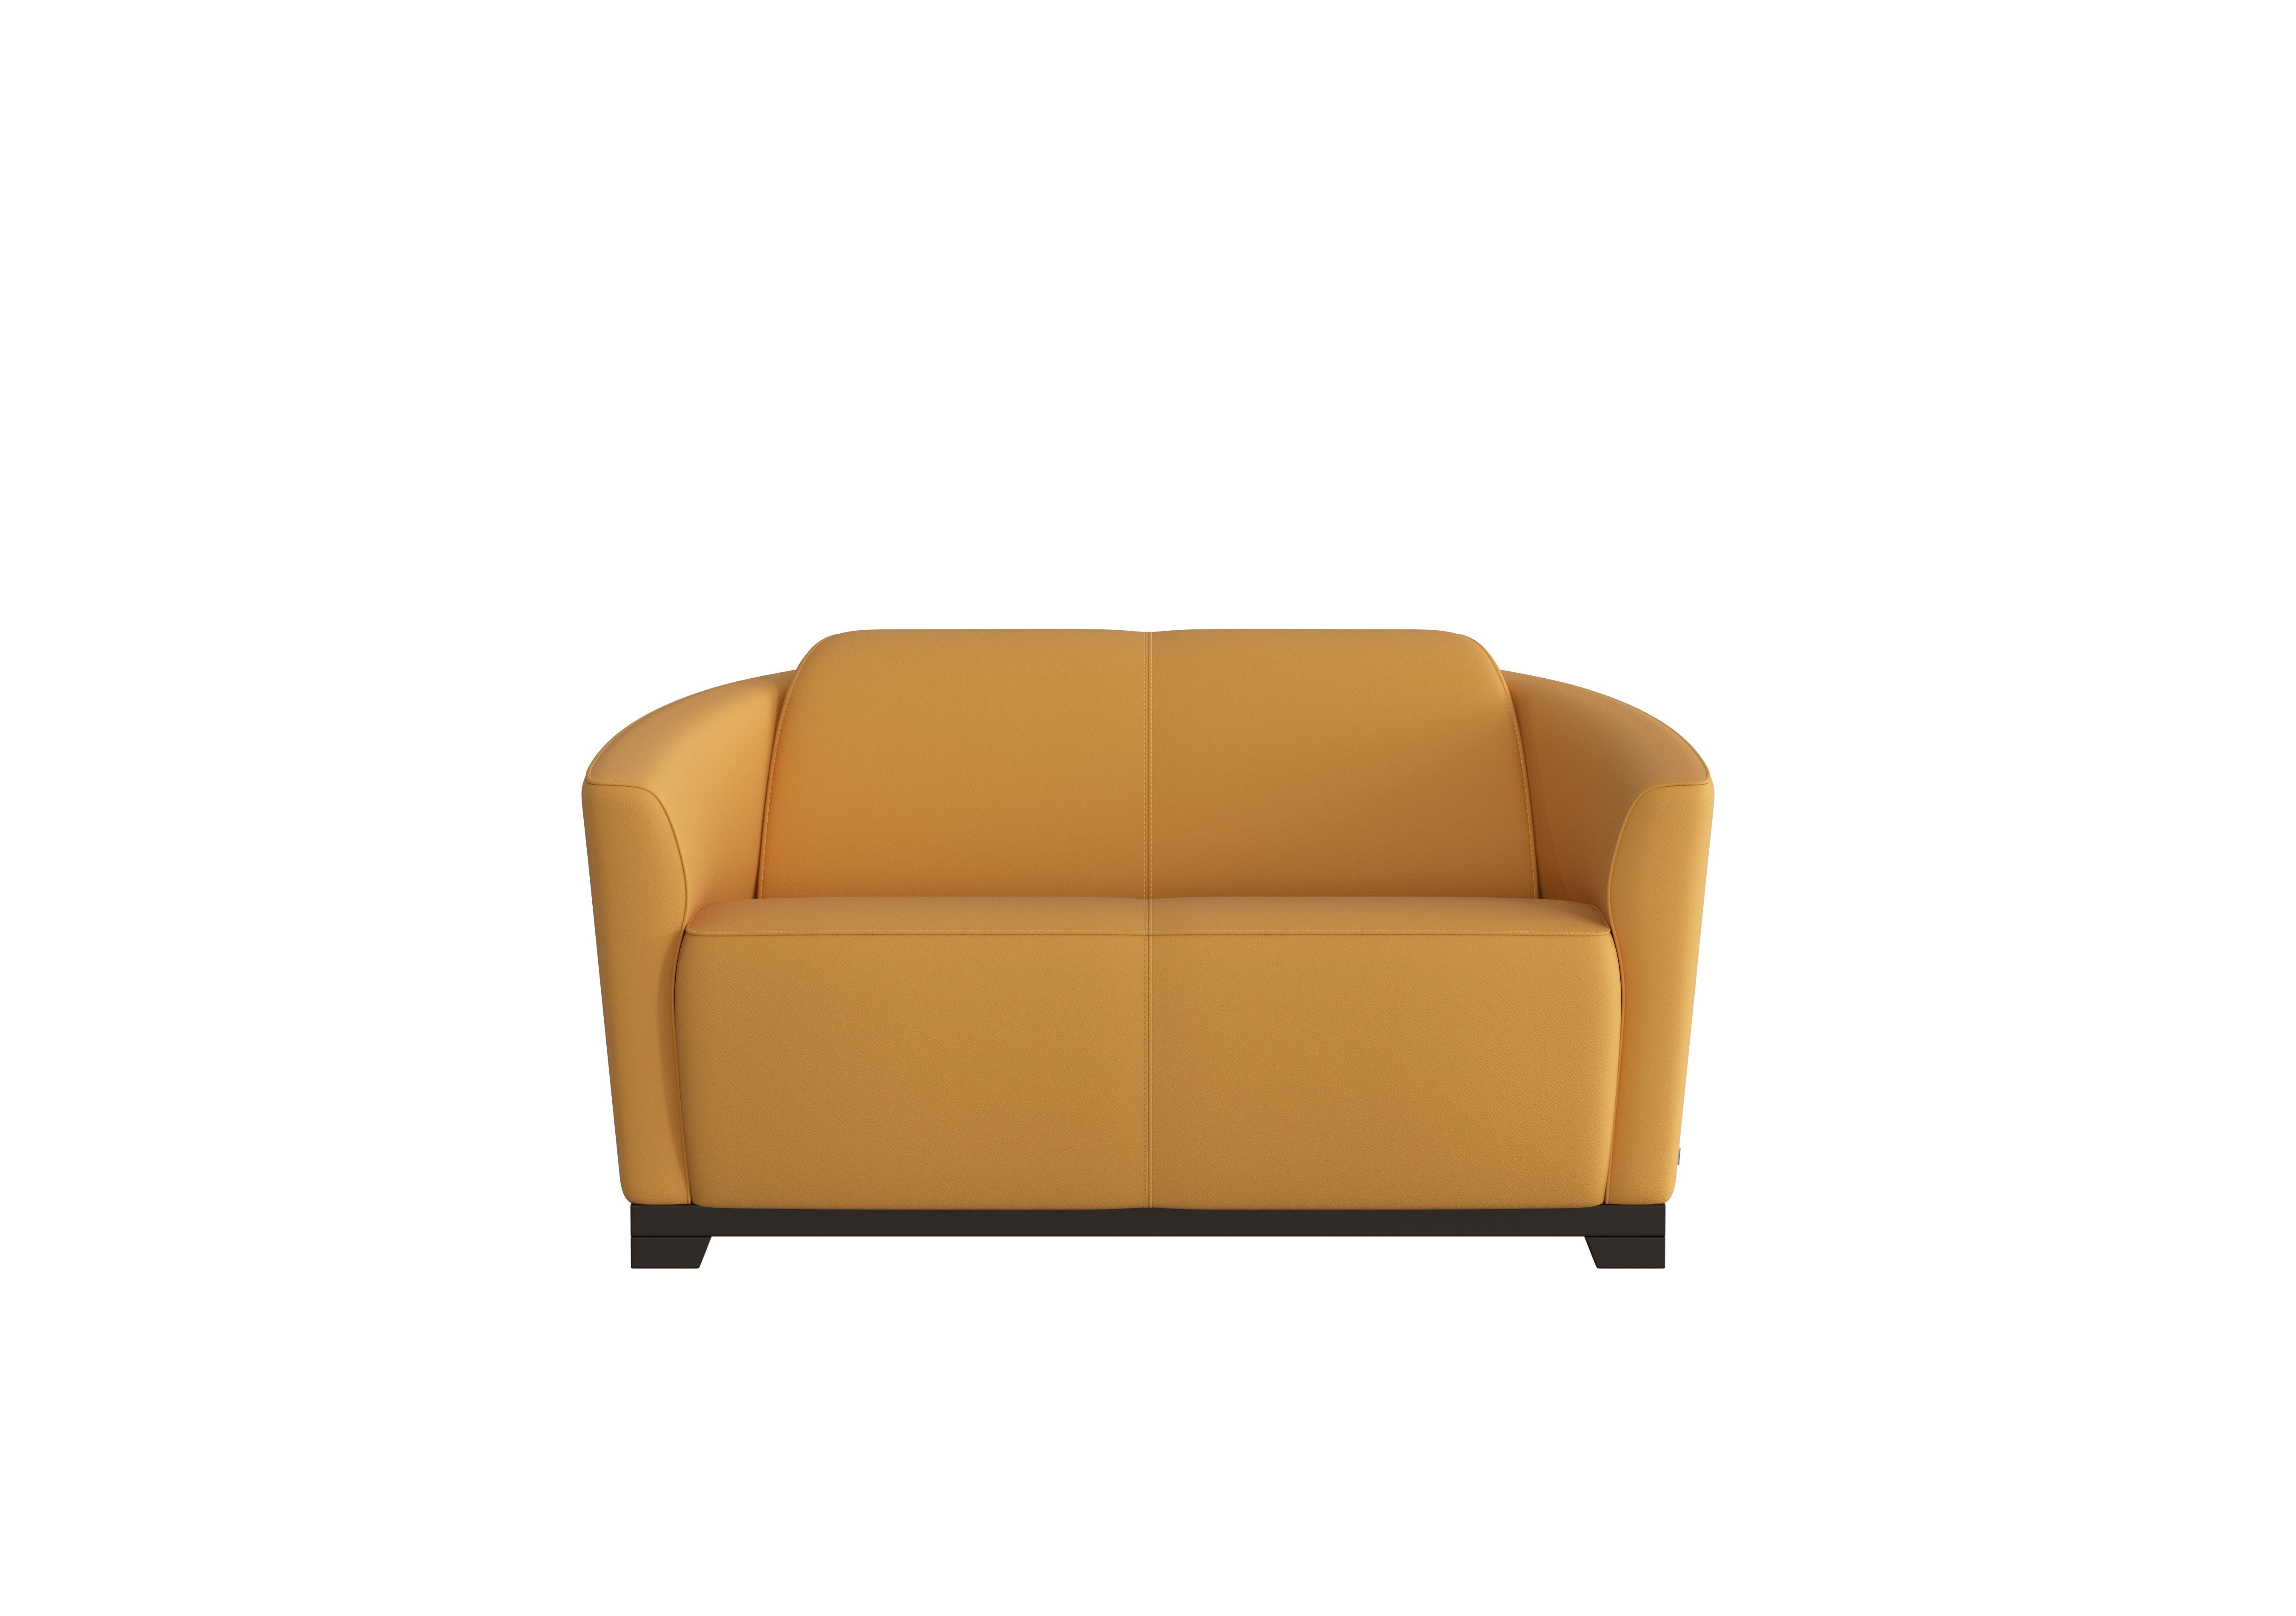 Ketty 2 Seater Leather Sofa in Torello Senape 355 on Furniture Village